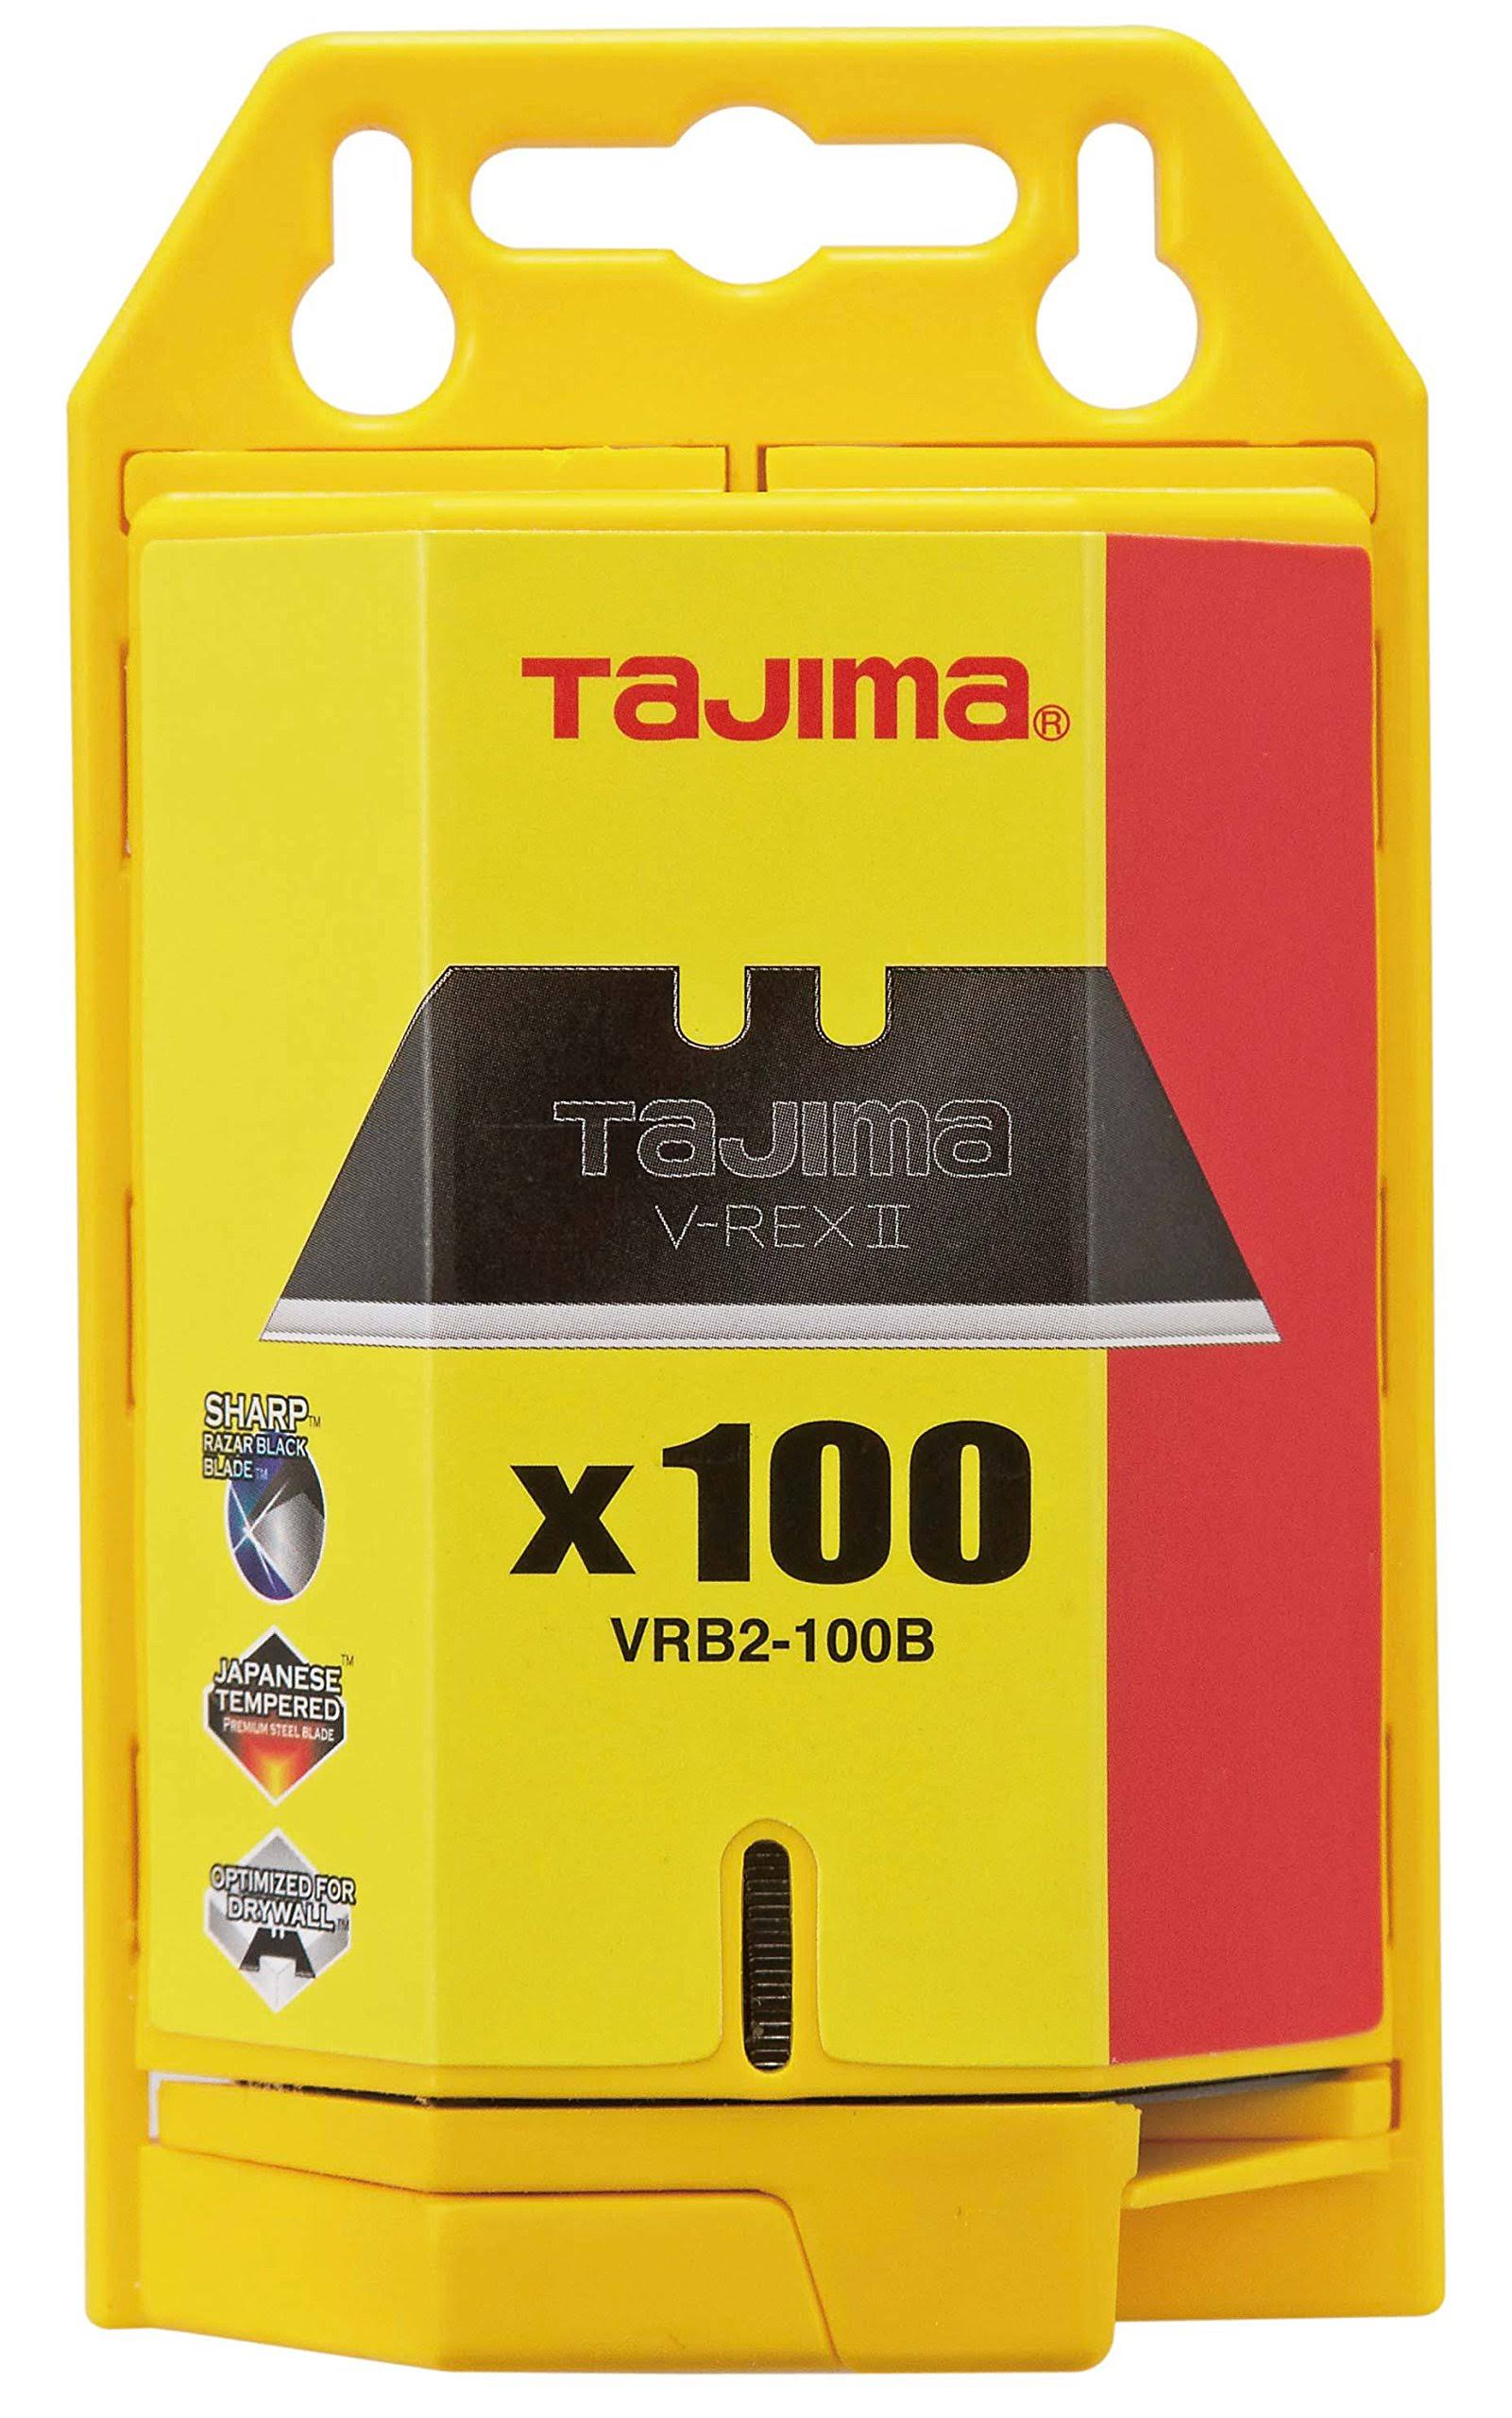 Tajima V Rex II Tempered Steel Utility Knife Blades - 100pk